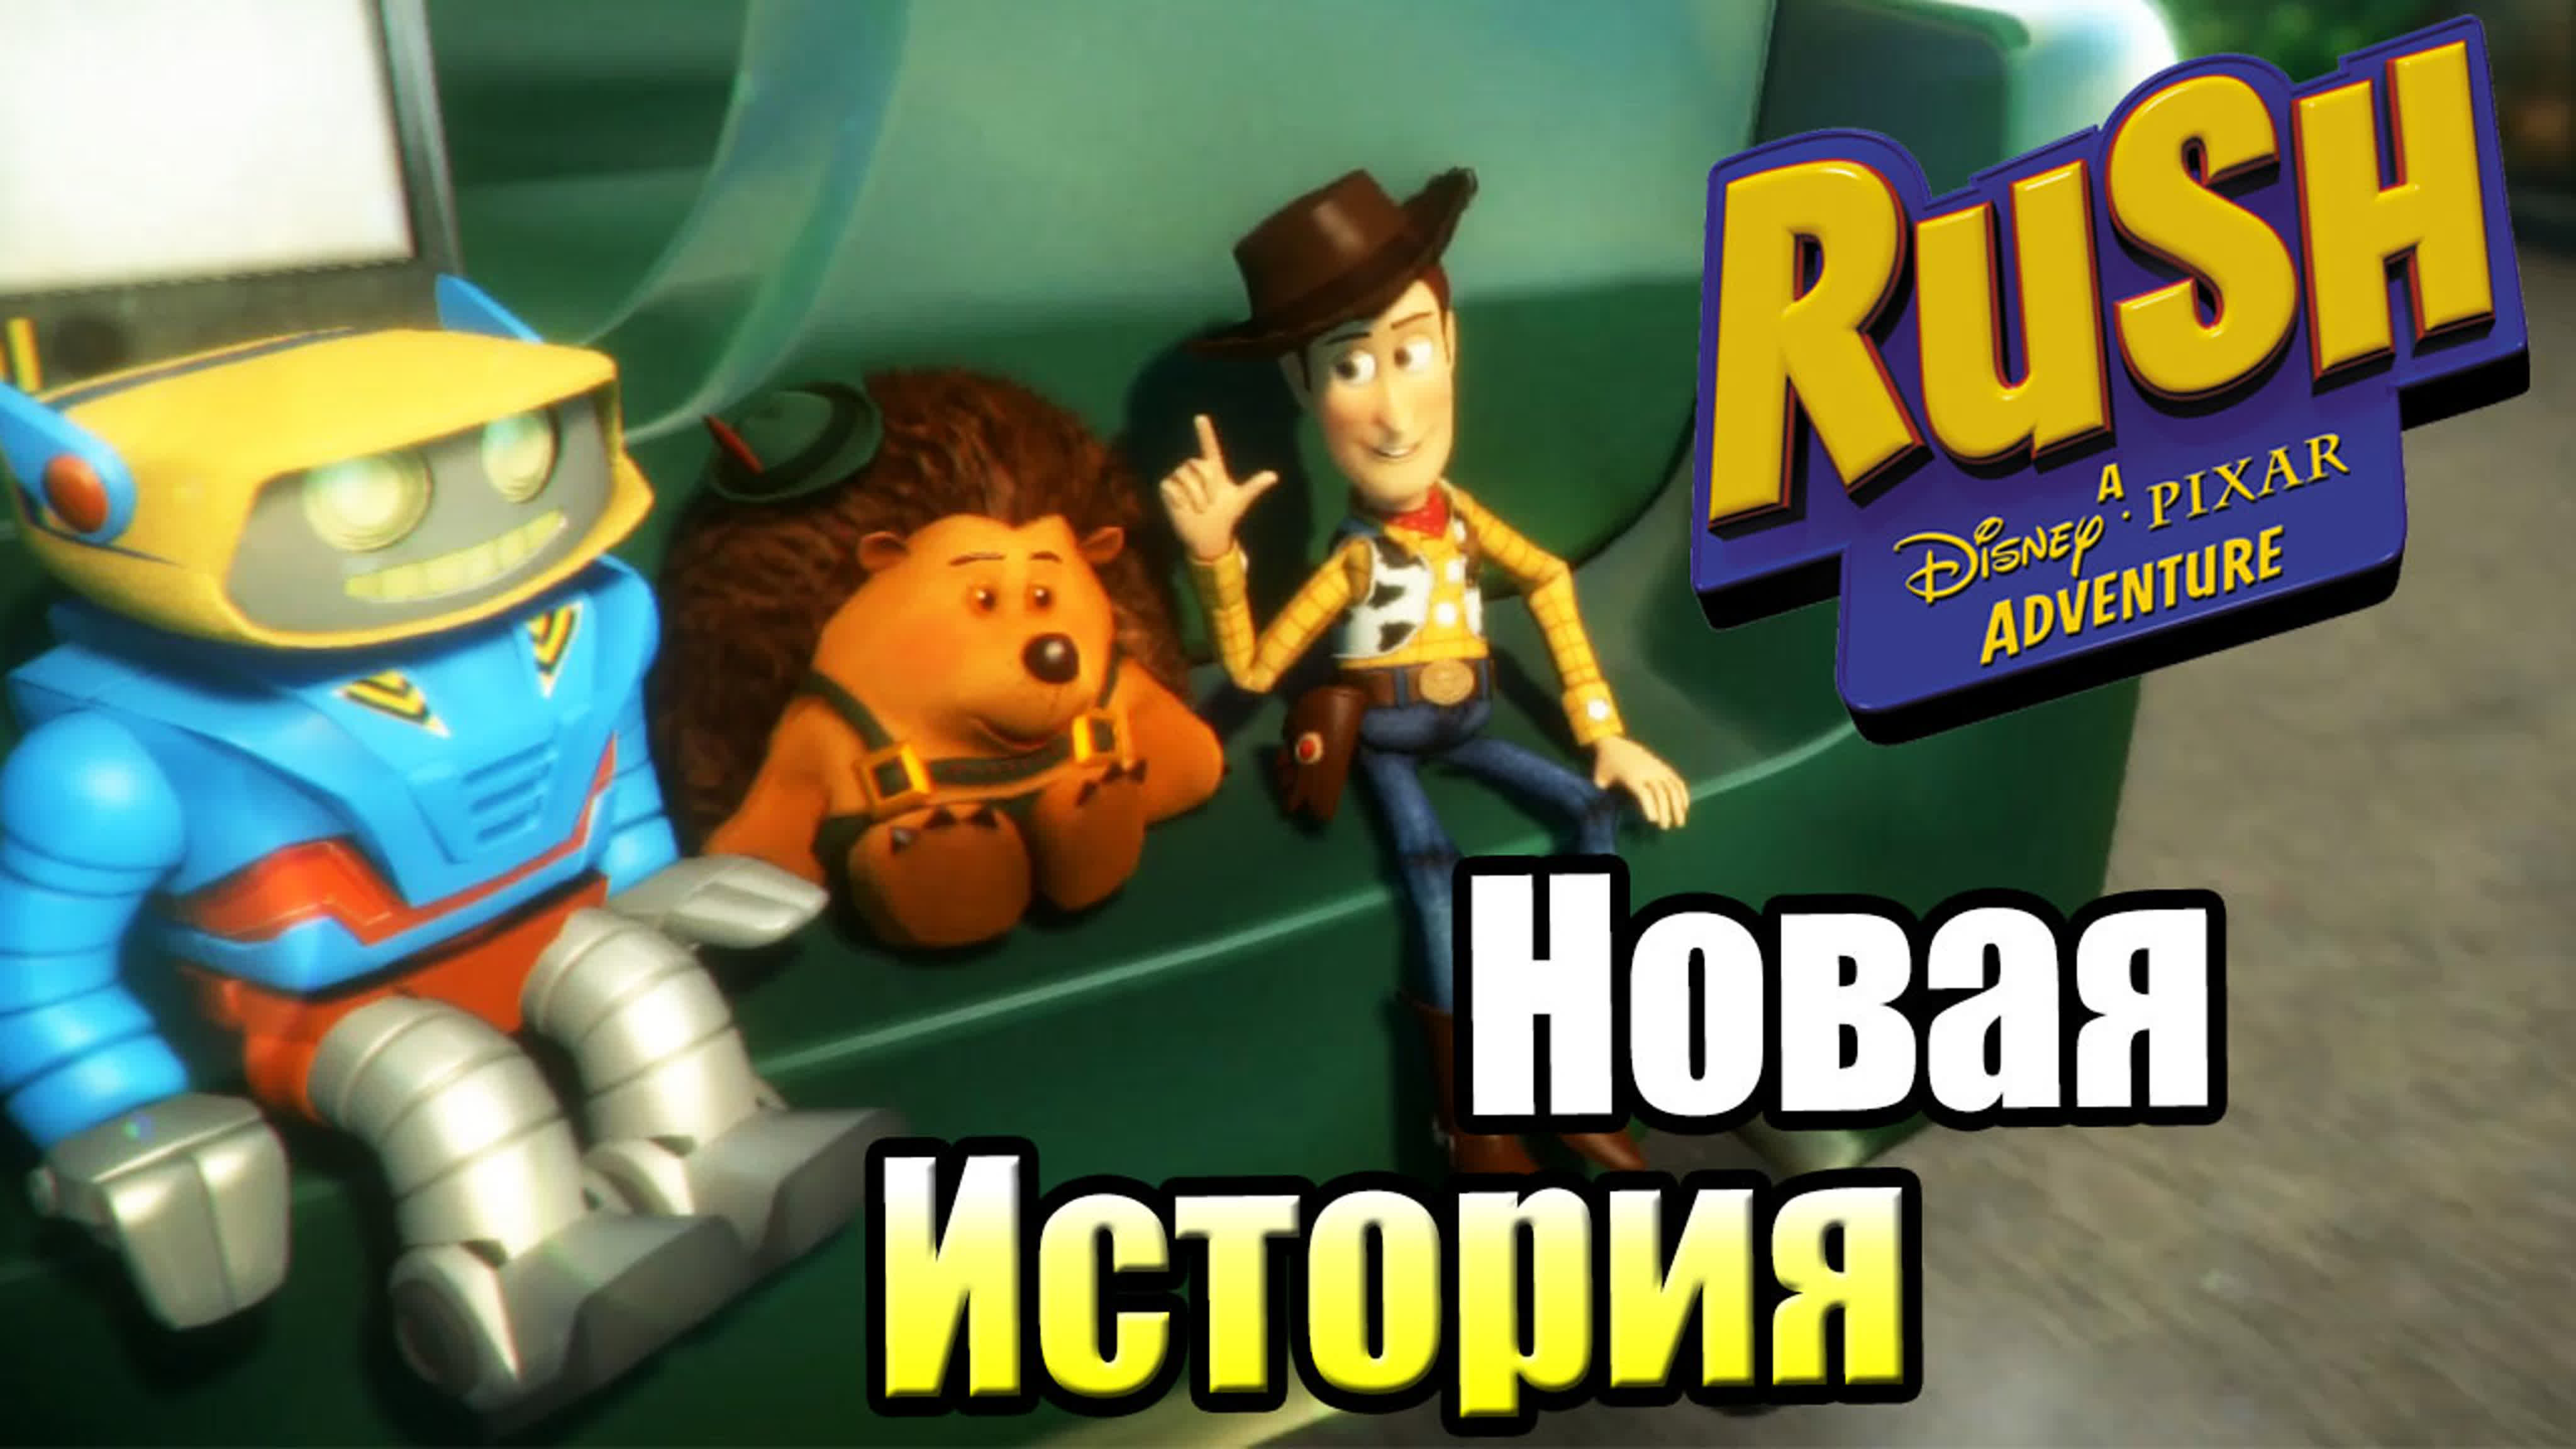 Rush a Disney Pixar Adventure (PC)